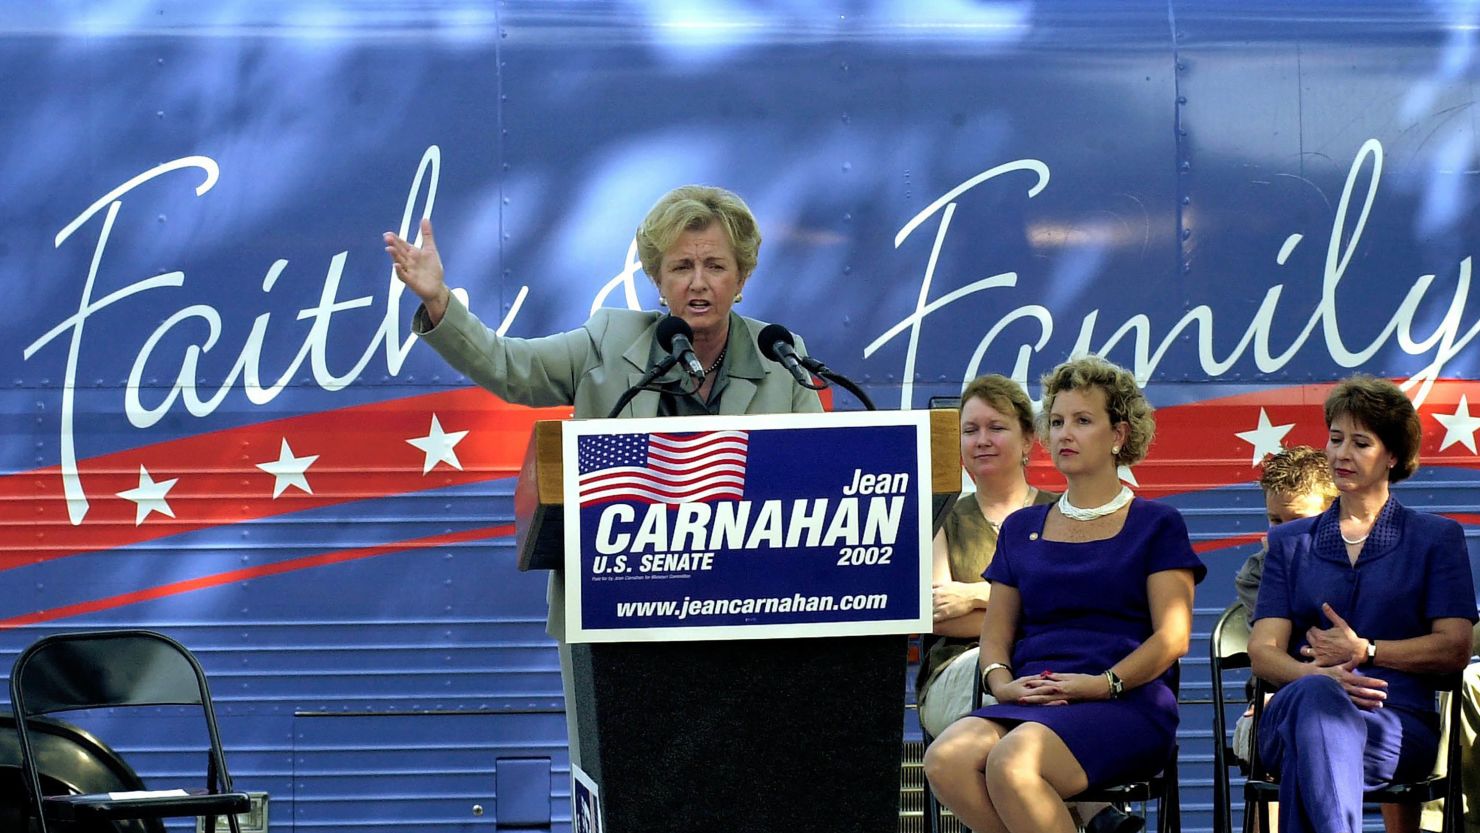 Jean Carnahan: A Trailblazer for Missouri in the US Senate